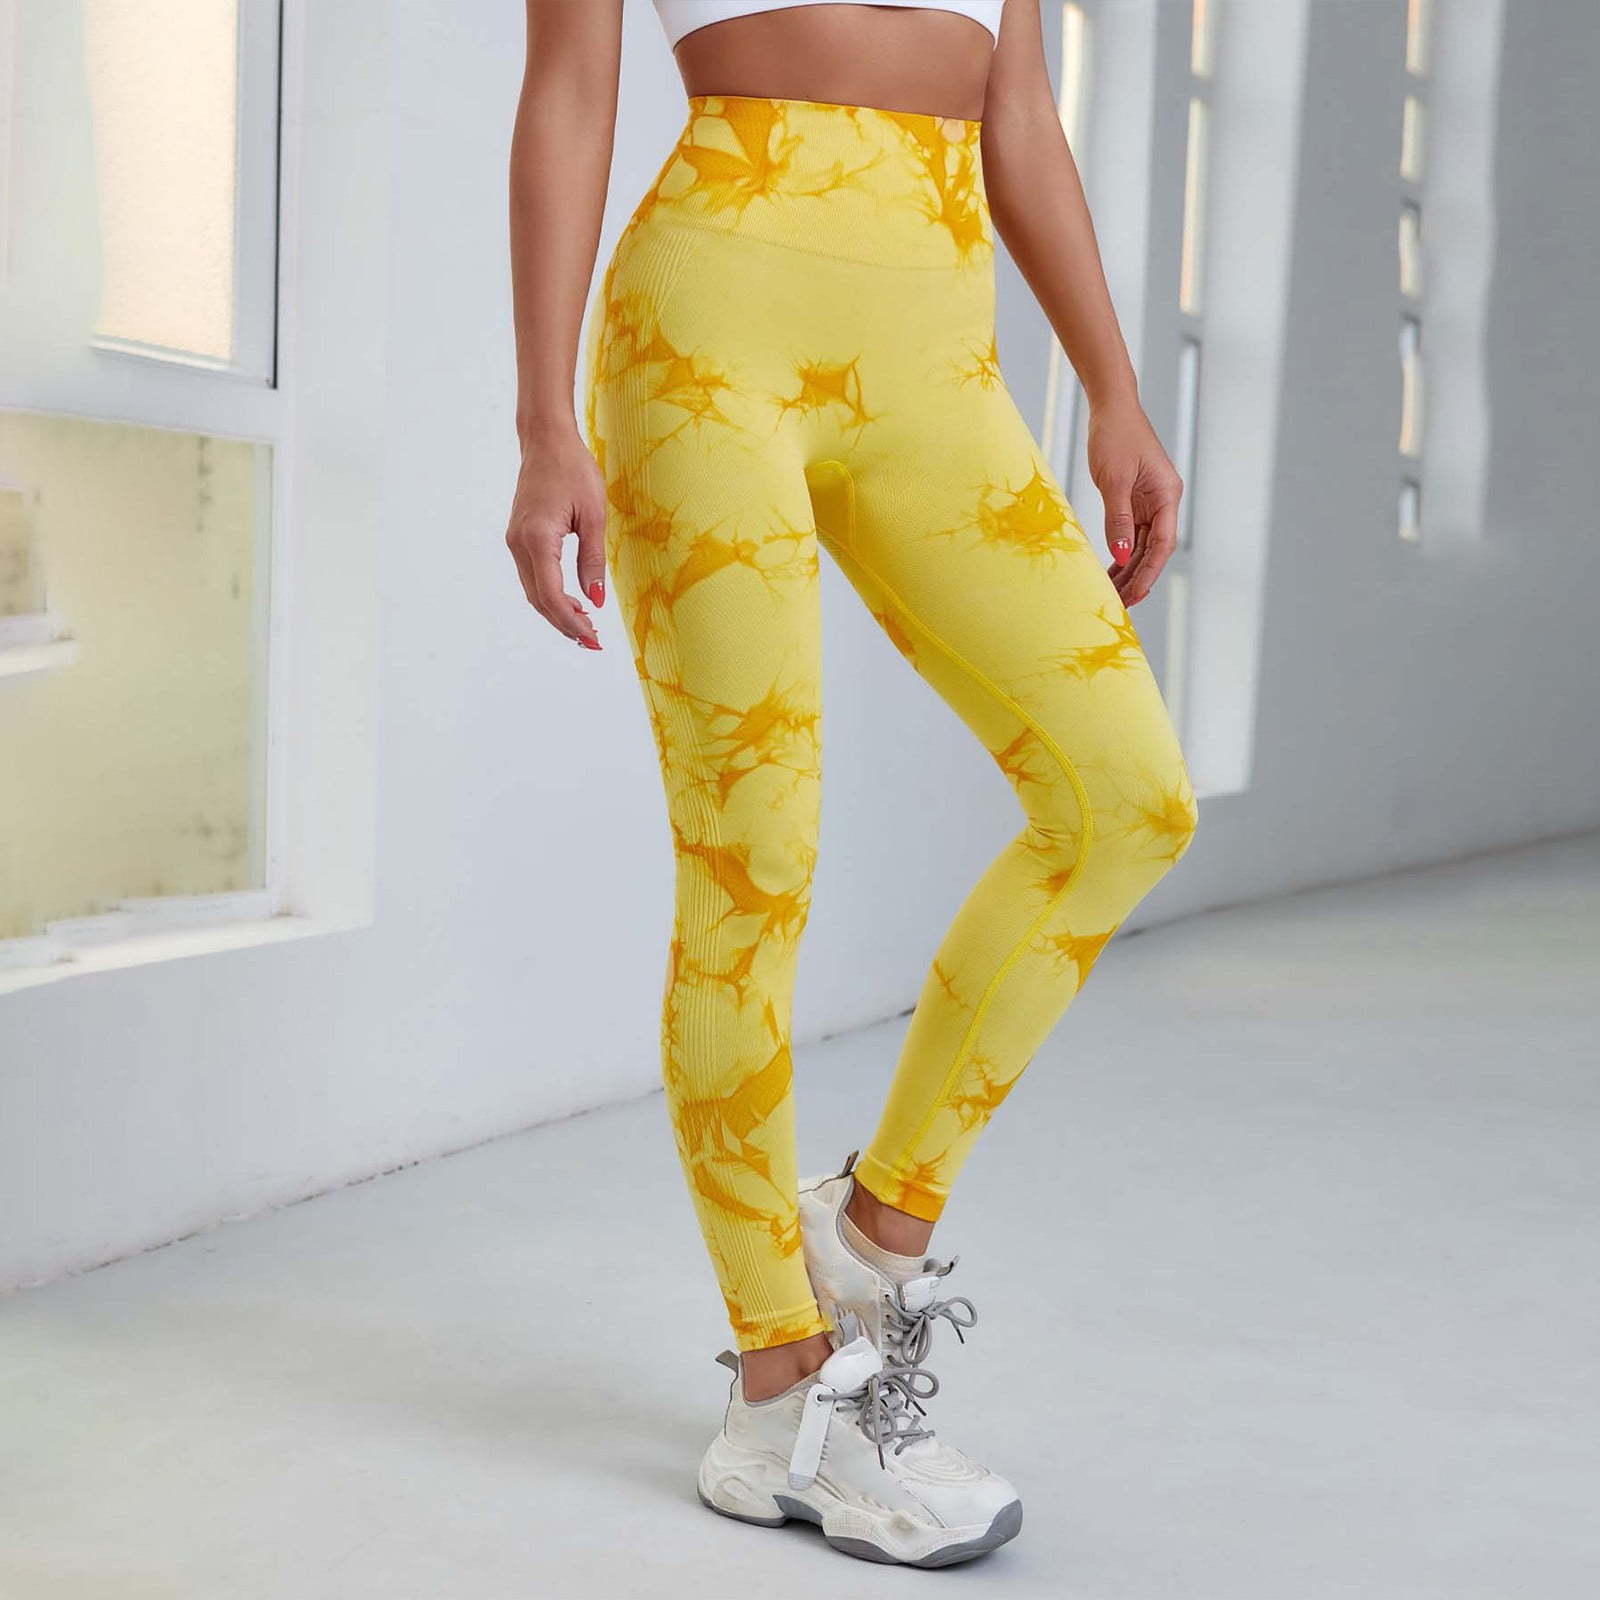 Gubotare Yoga Pants For Women Leggings with Pockets for Women(Reg & Plus  Size) - High Waist Tummy Control Yoga Pants with Pockets for Workout,Yellow  L 